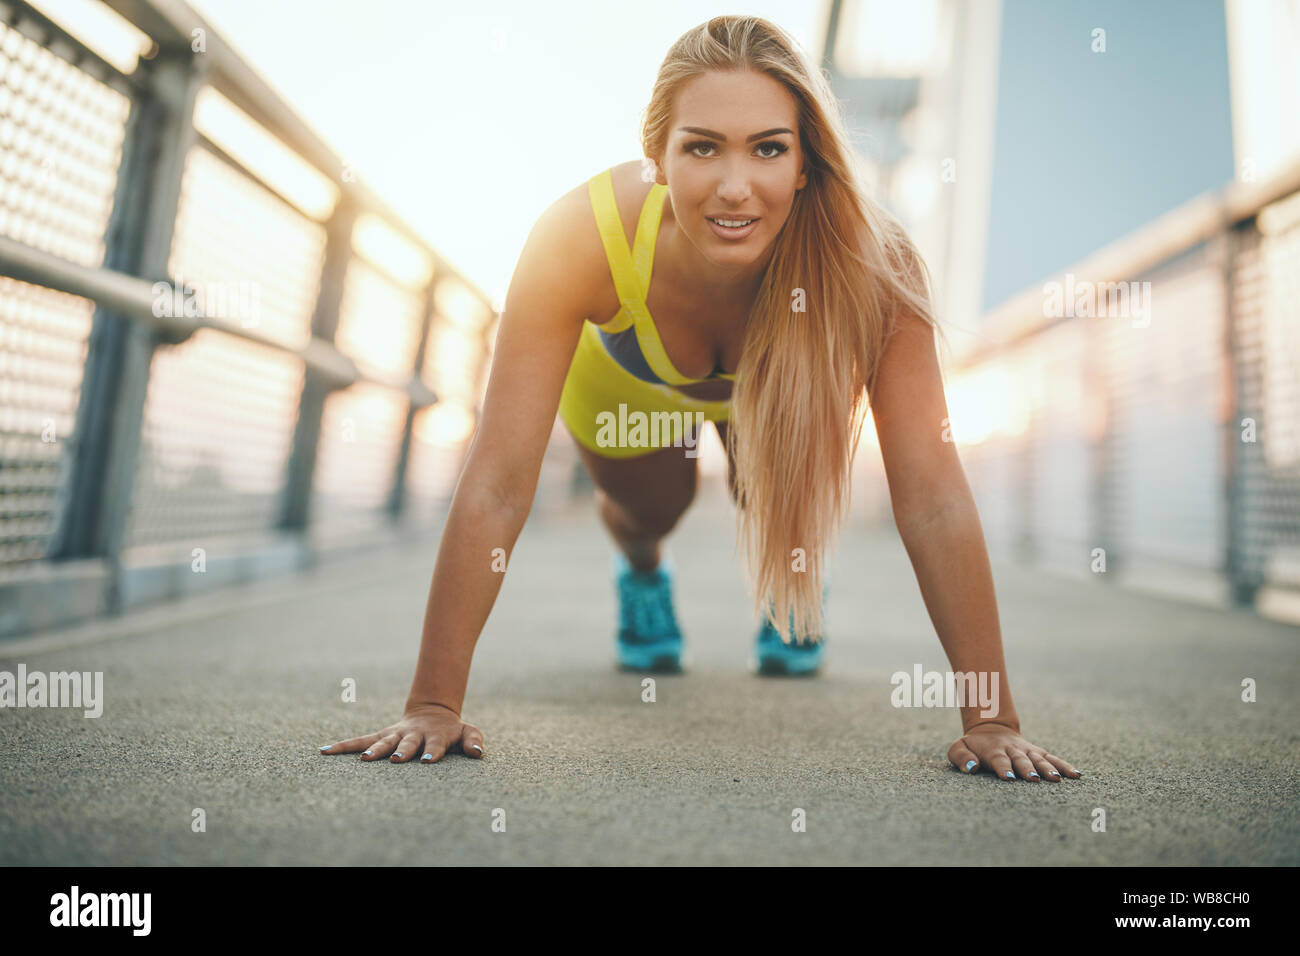 Young Sport Frau tun, Push-up-Übung auf der Brücke während outdoor Cross Training durch den Fluss fokussiert. Stockfoto